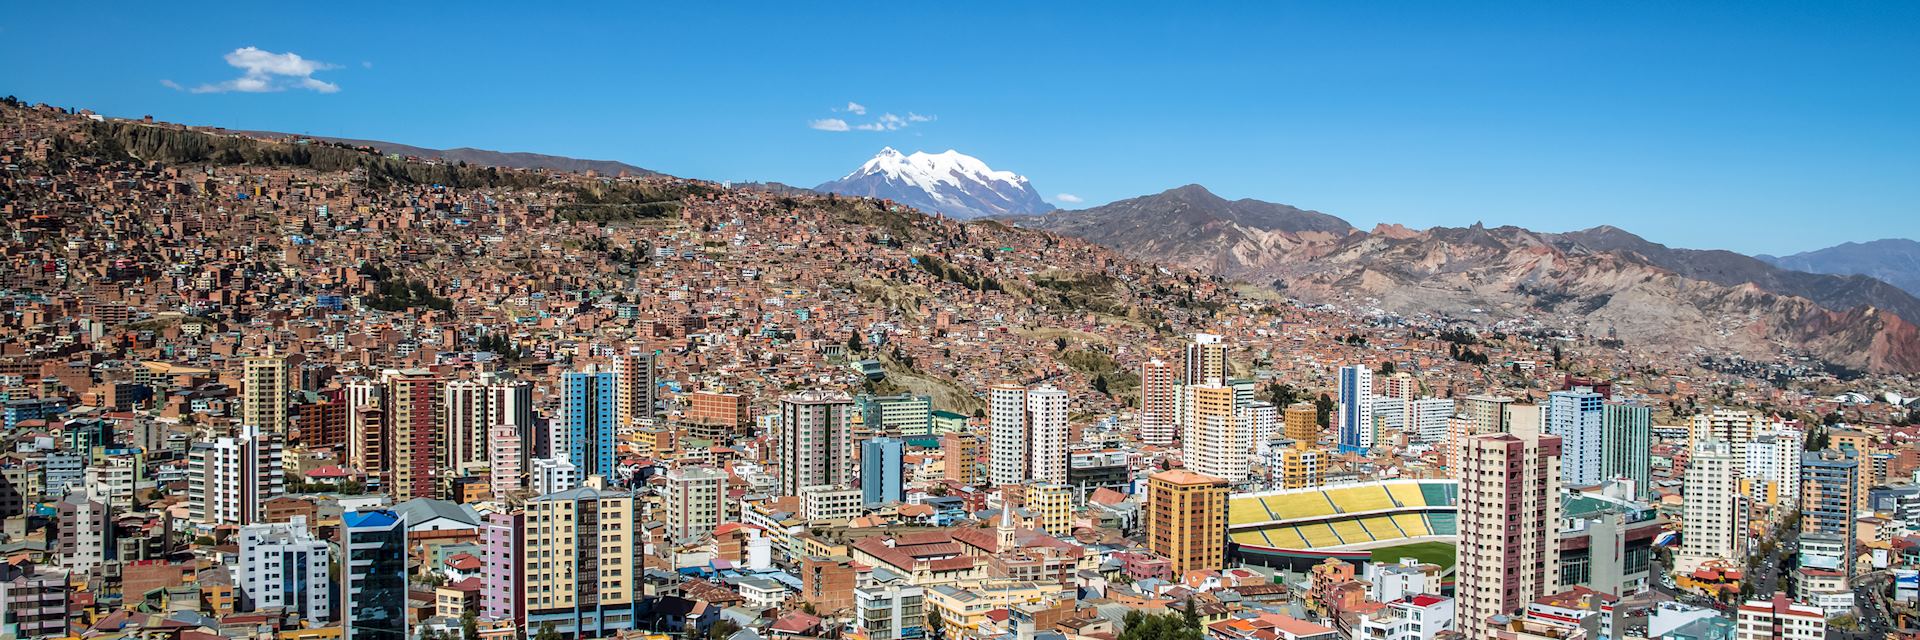 Aerial view of La Paz